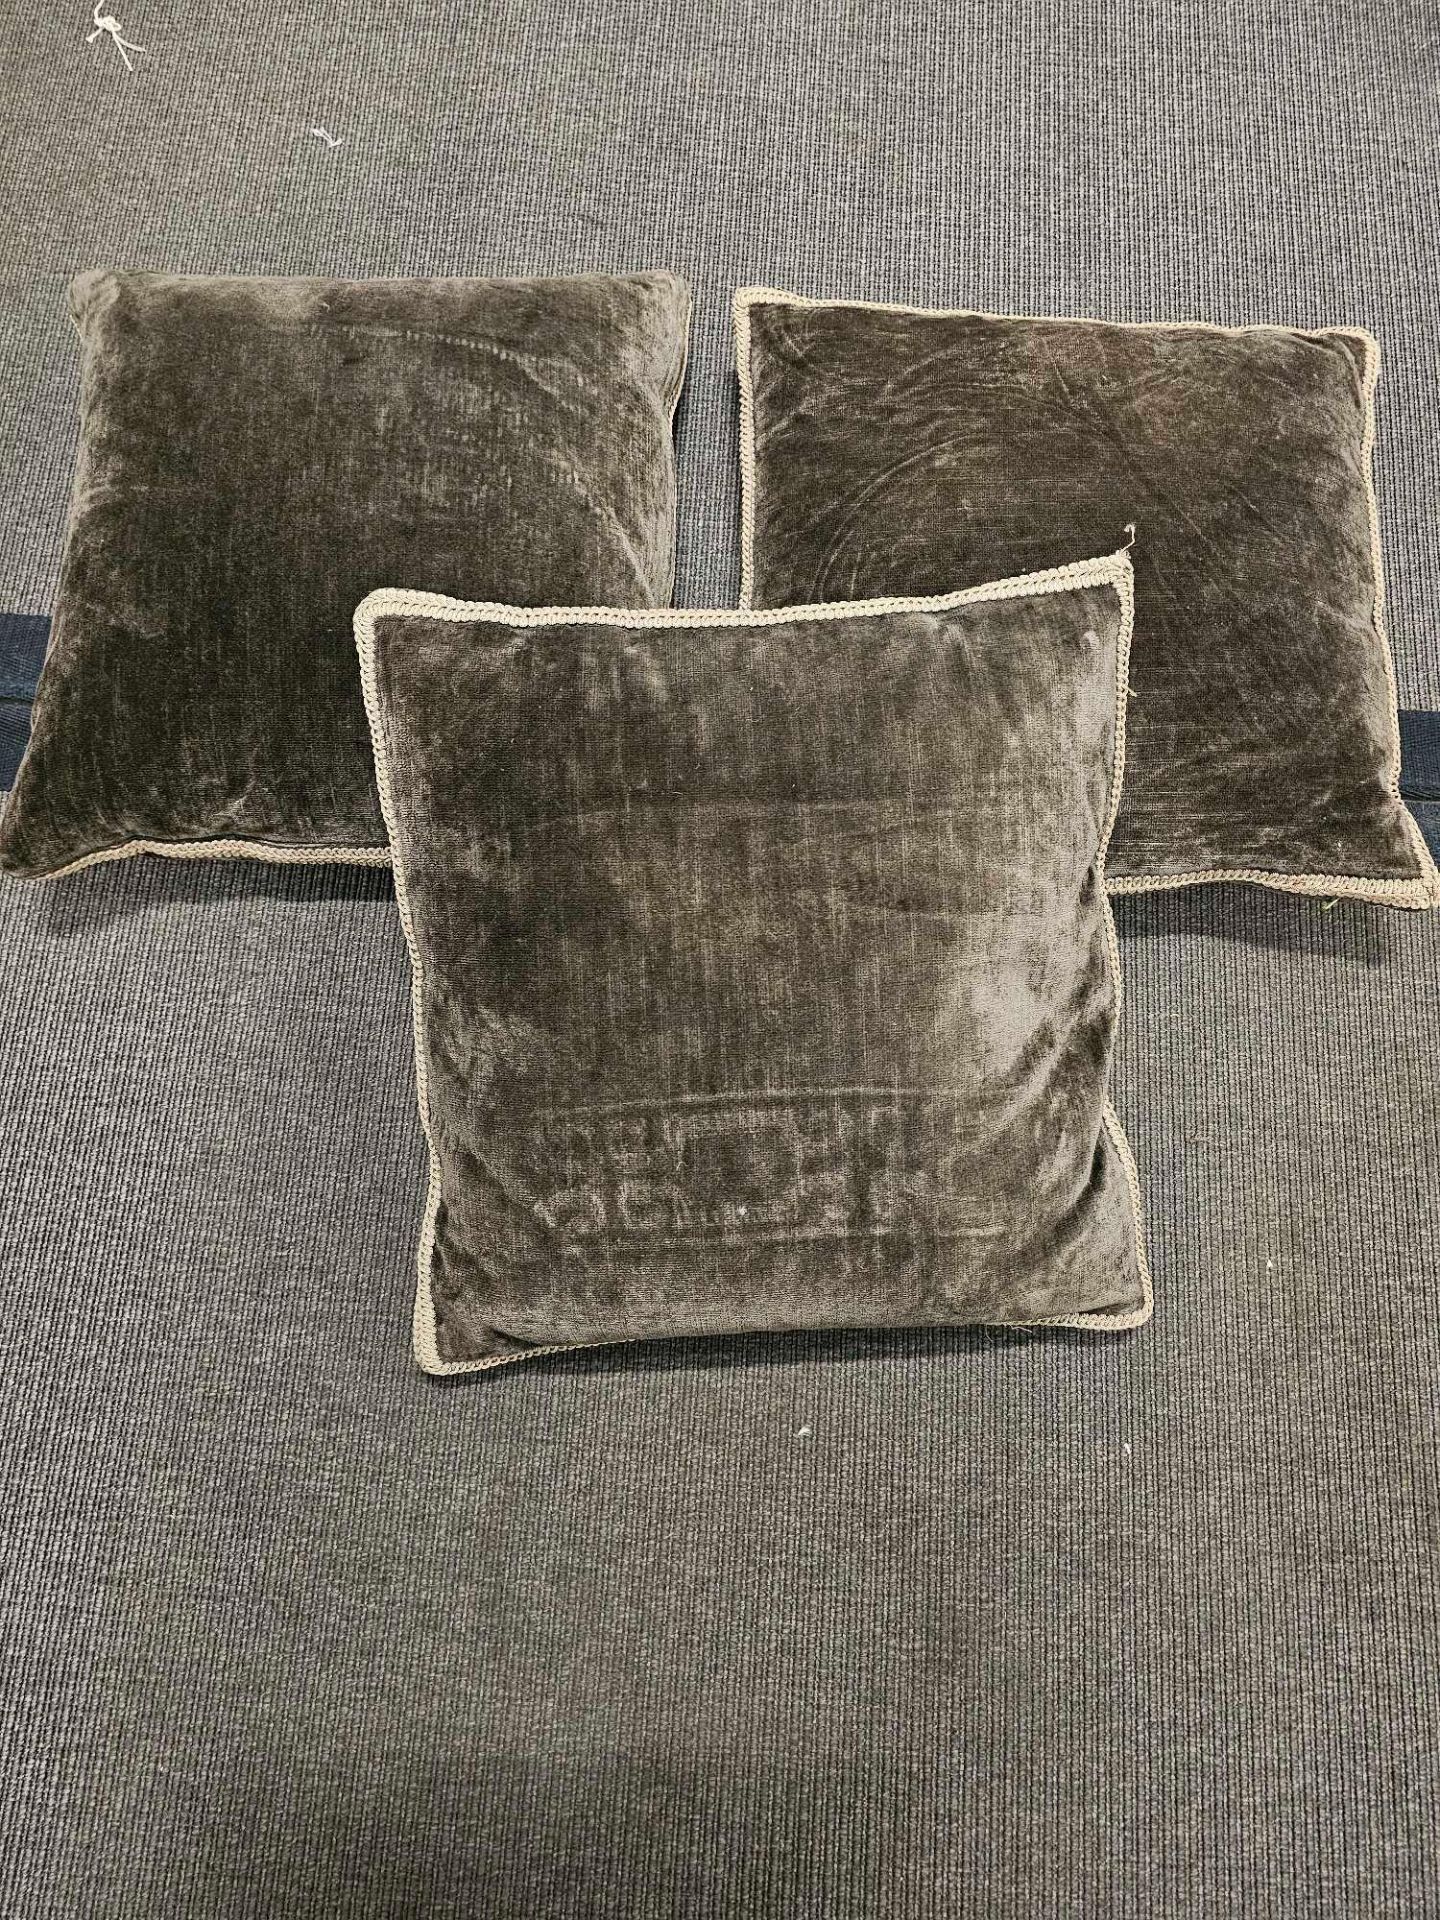 3 x Chocolate Brown Cushions Embroidery Edge Size 40 x 40cm ( Ref Cush 134)